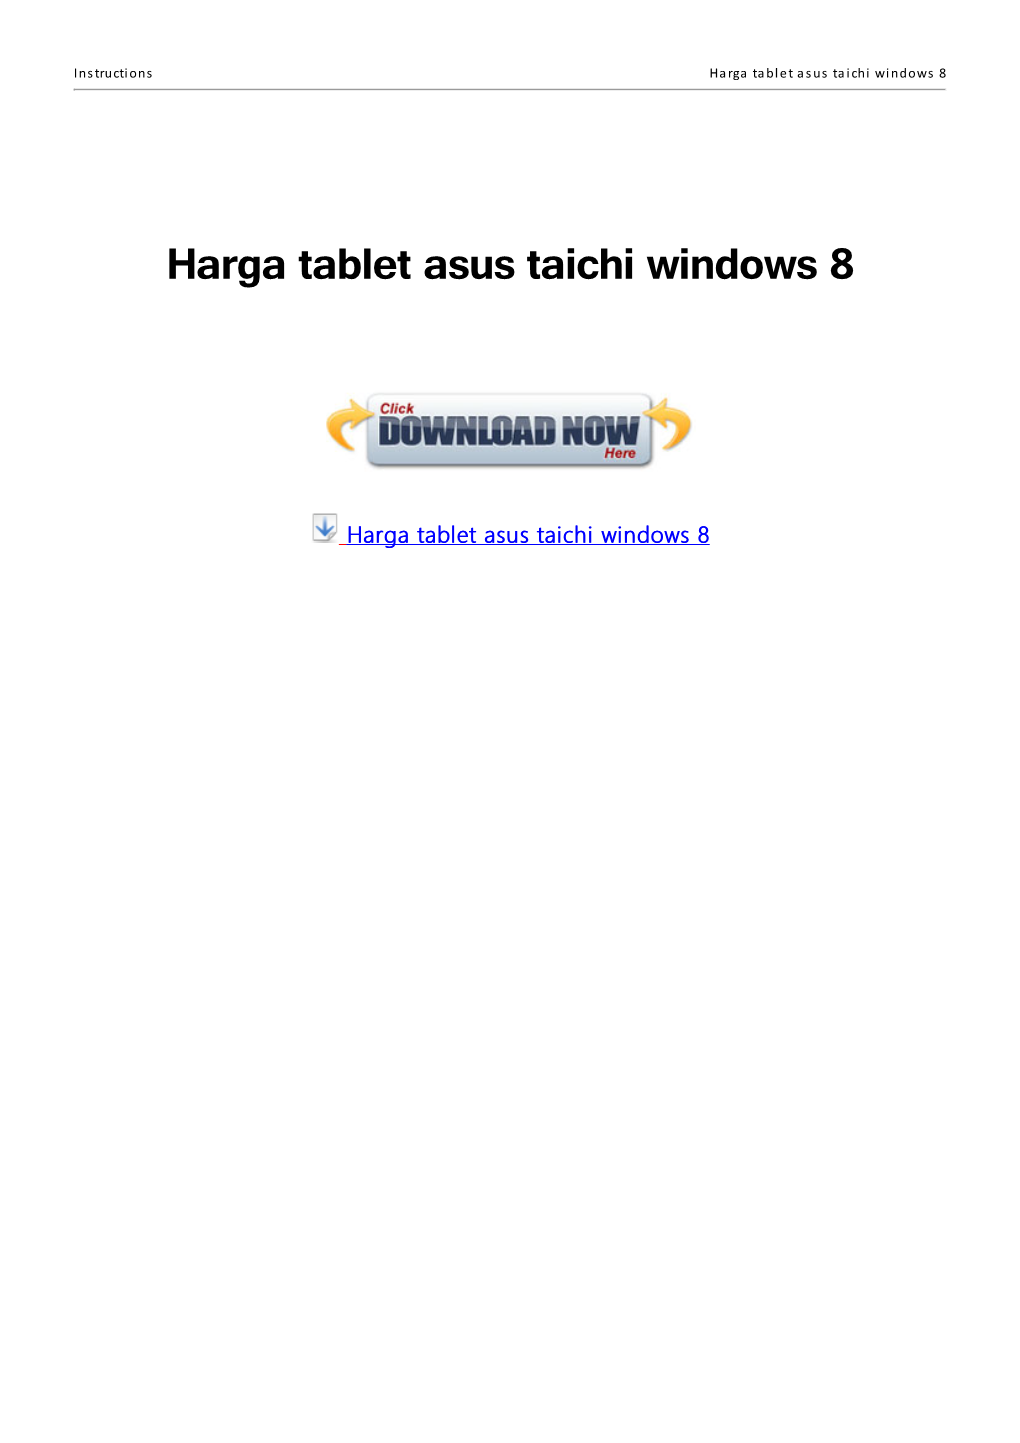 Harga Tablet Asus Taichi Windows 8